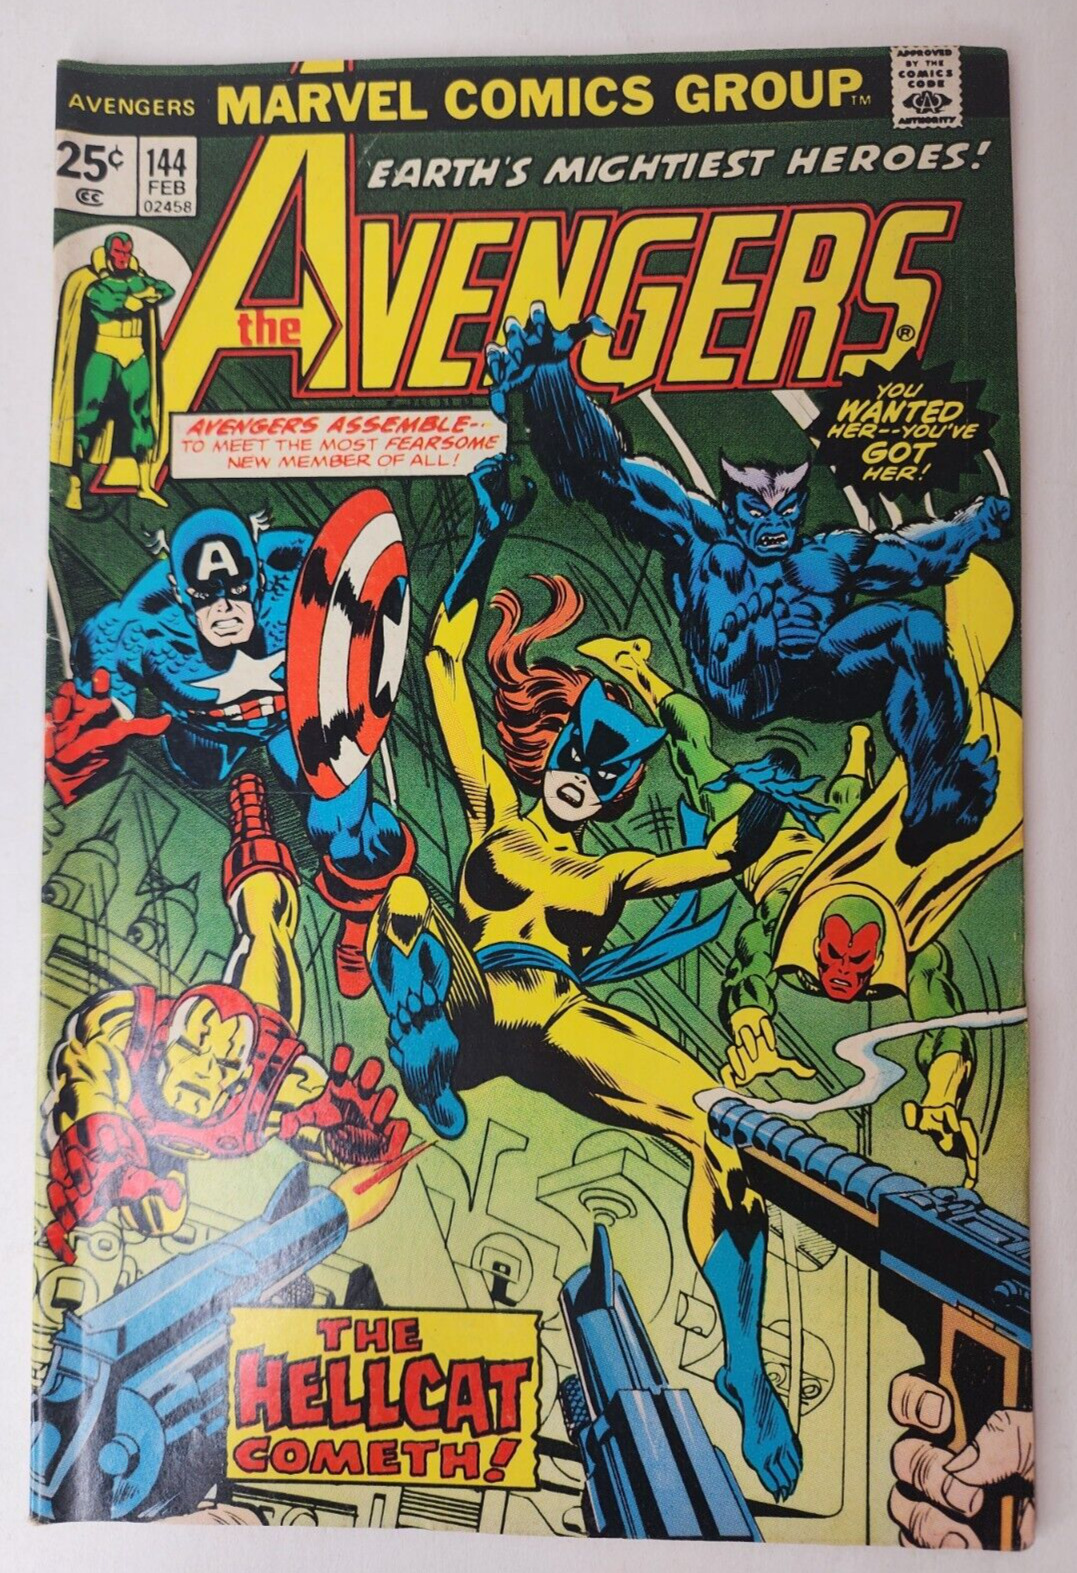 Vintage Marvel Comics The Avengers #144 1976 Marvel Comics Group